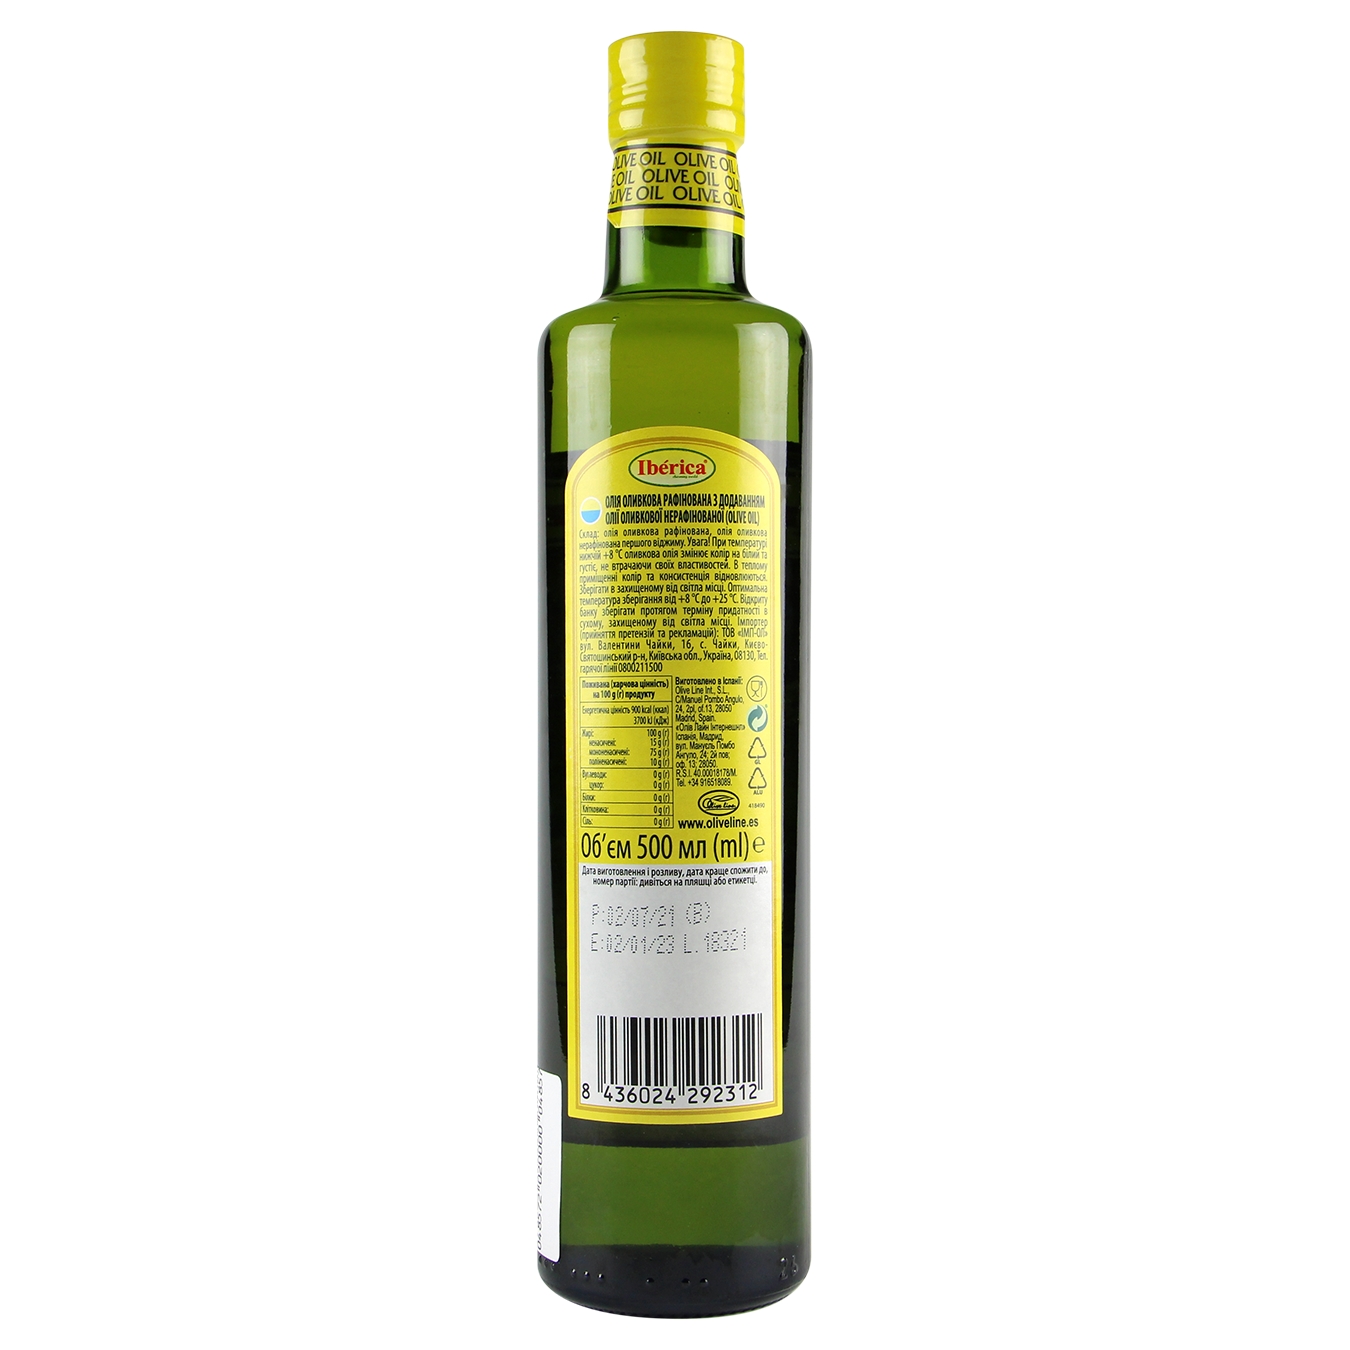 Iberica Refined 100% Olive Oil 0,5l glass 2